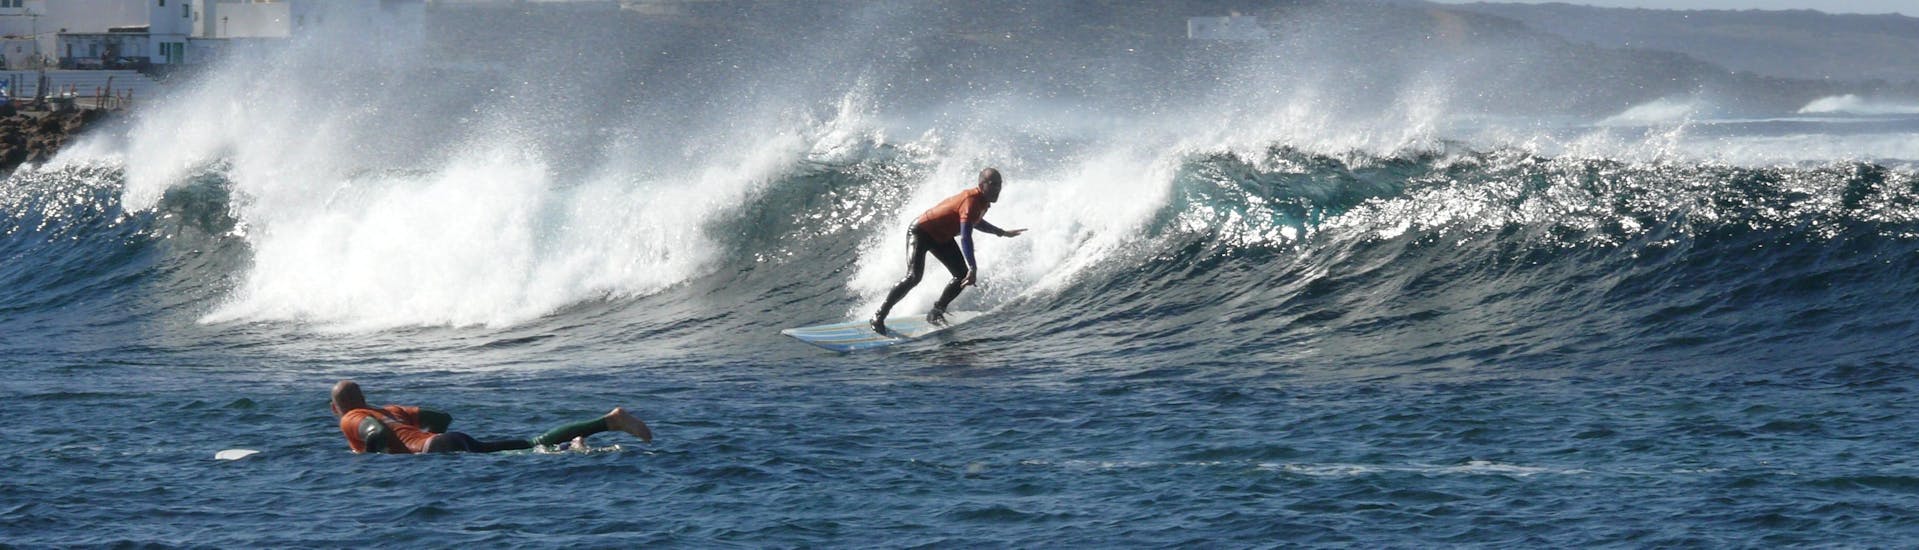 Lezioni private di surf da 10 anni per tutti i livelli.